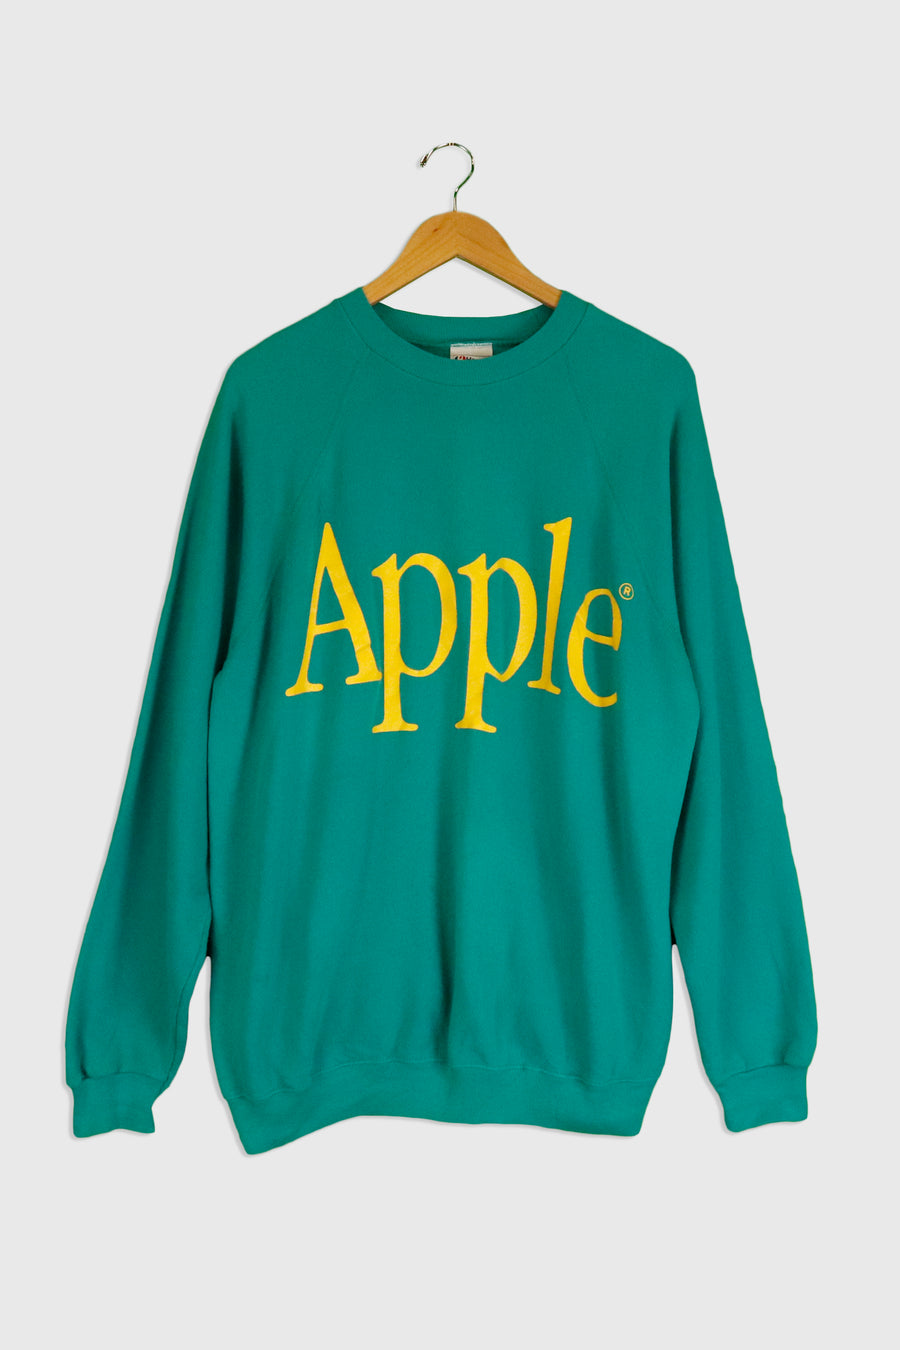 Vintage Vinyl 'Apple' Graphic Sweatshirt Sz XL